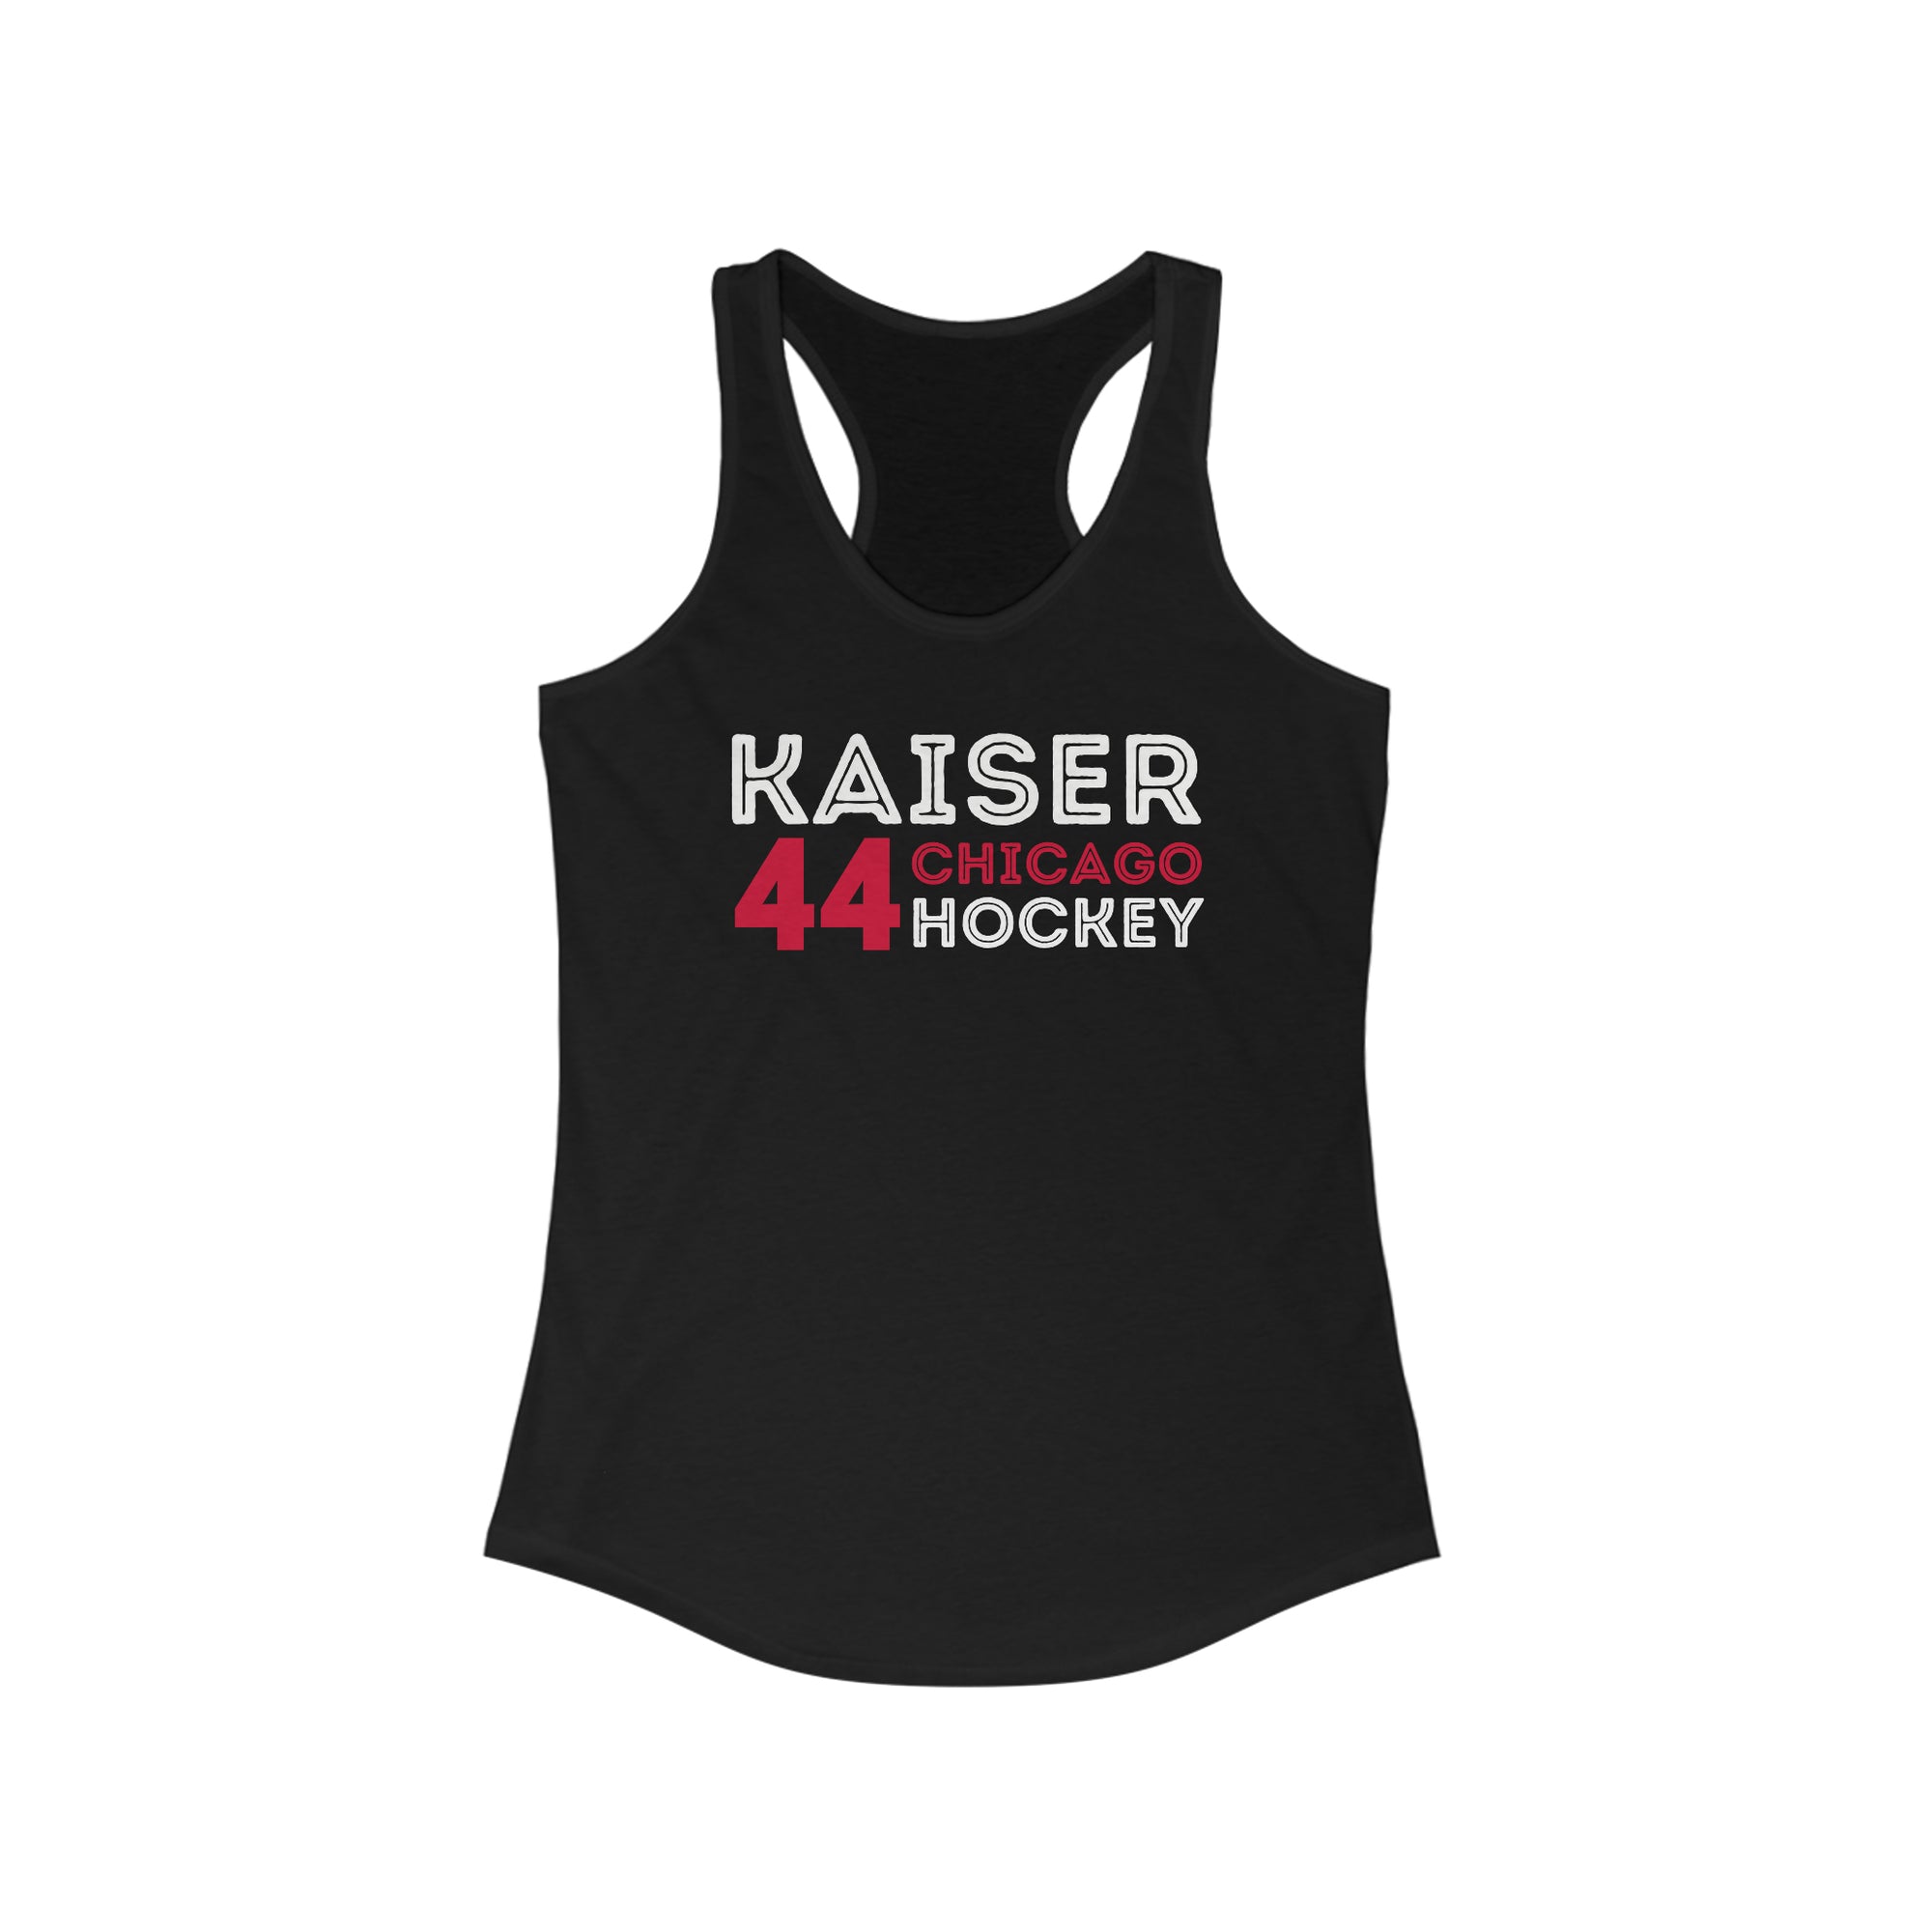 Kaiser 44 Chicago Hockey Grafitti Wall Design Women's Ideal Racerback Tank Top